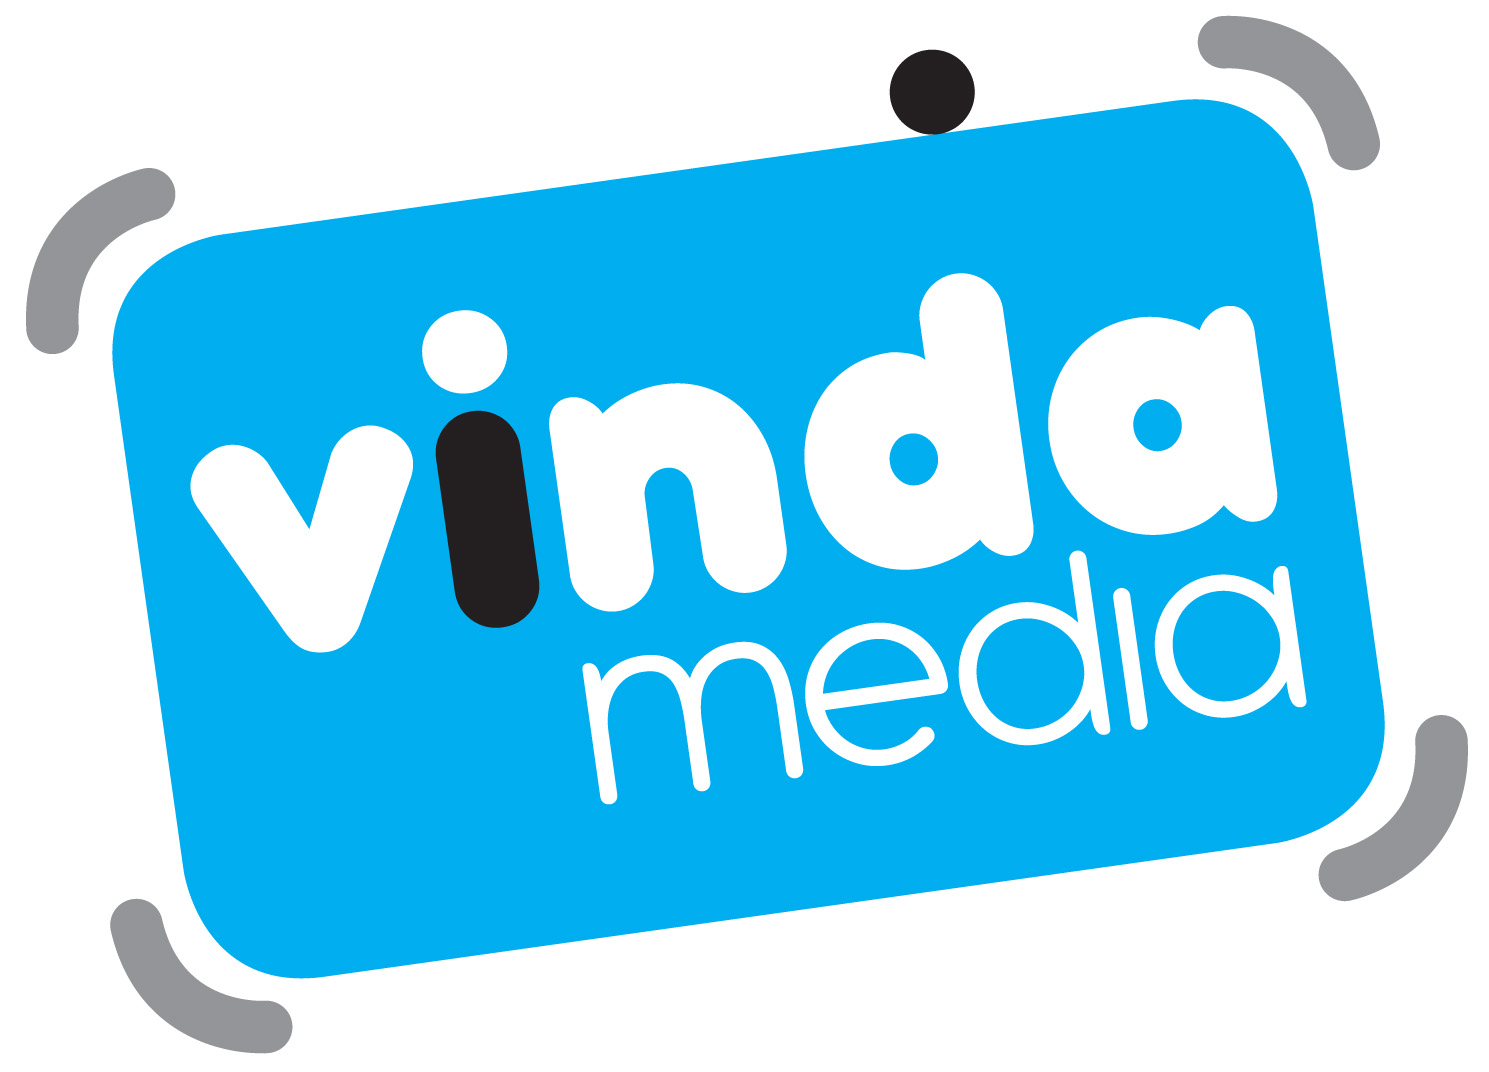 (c) Vindamedia.nl